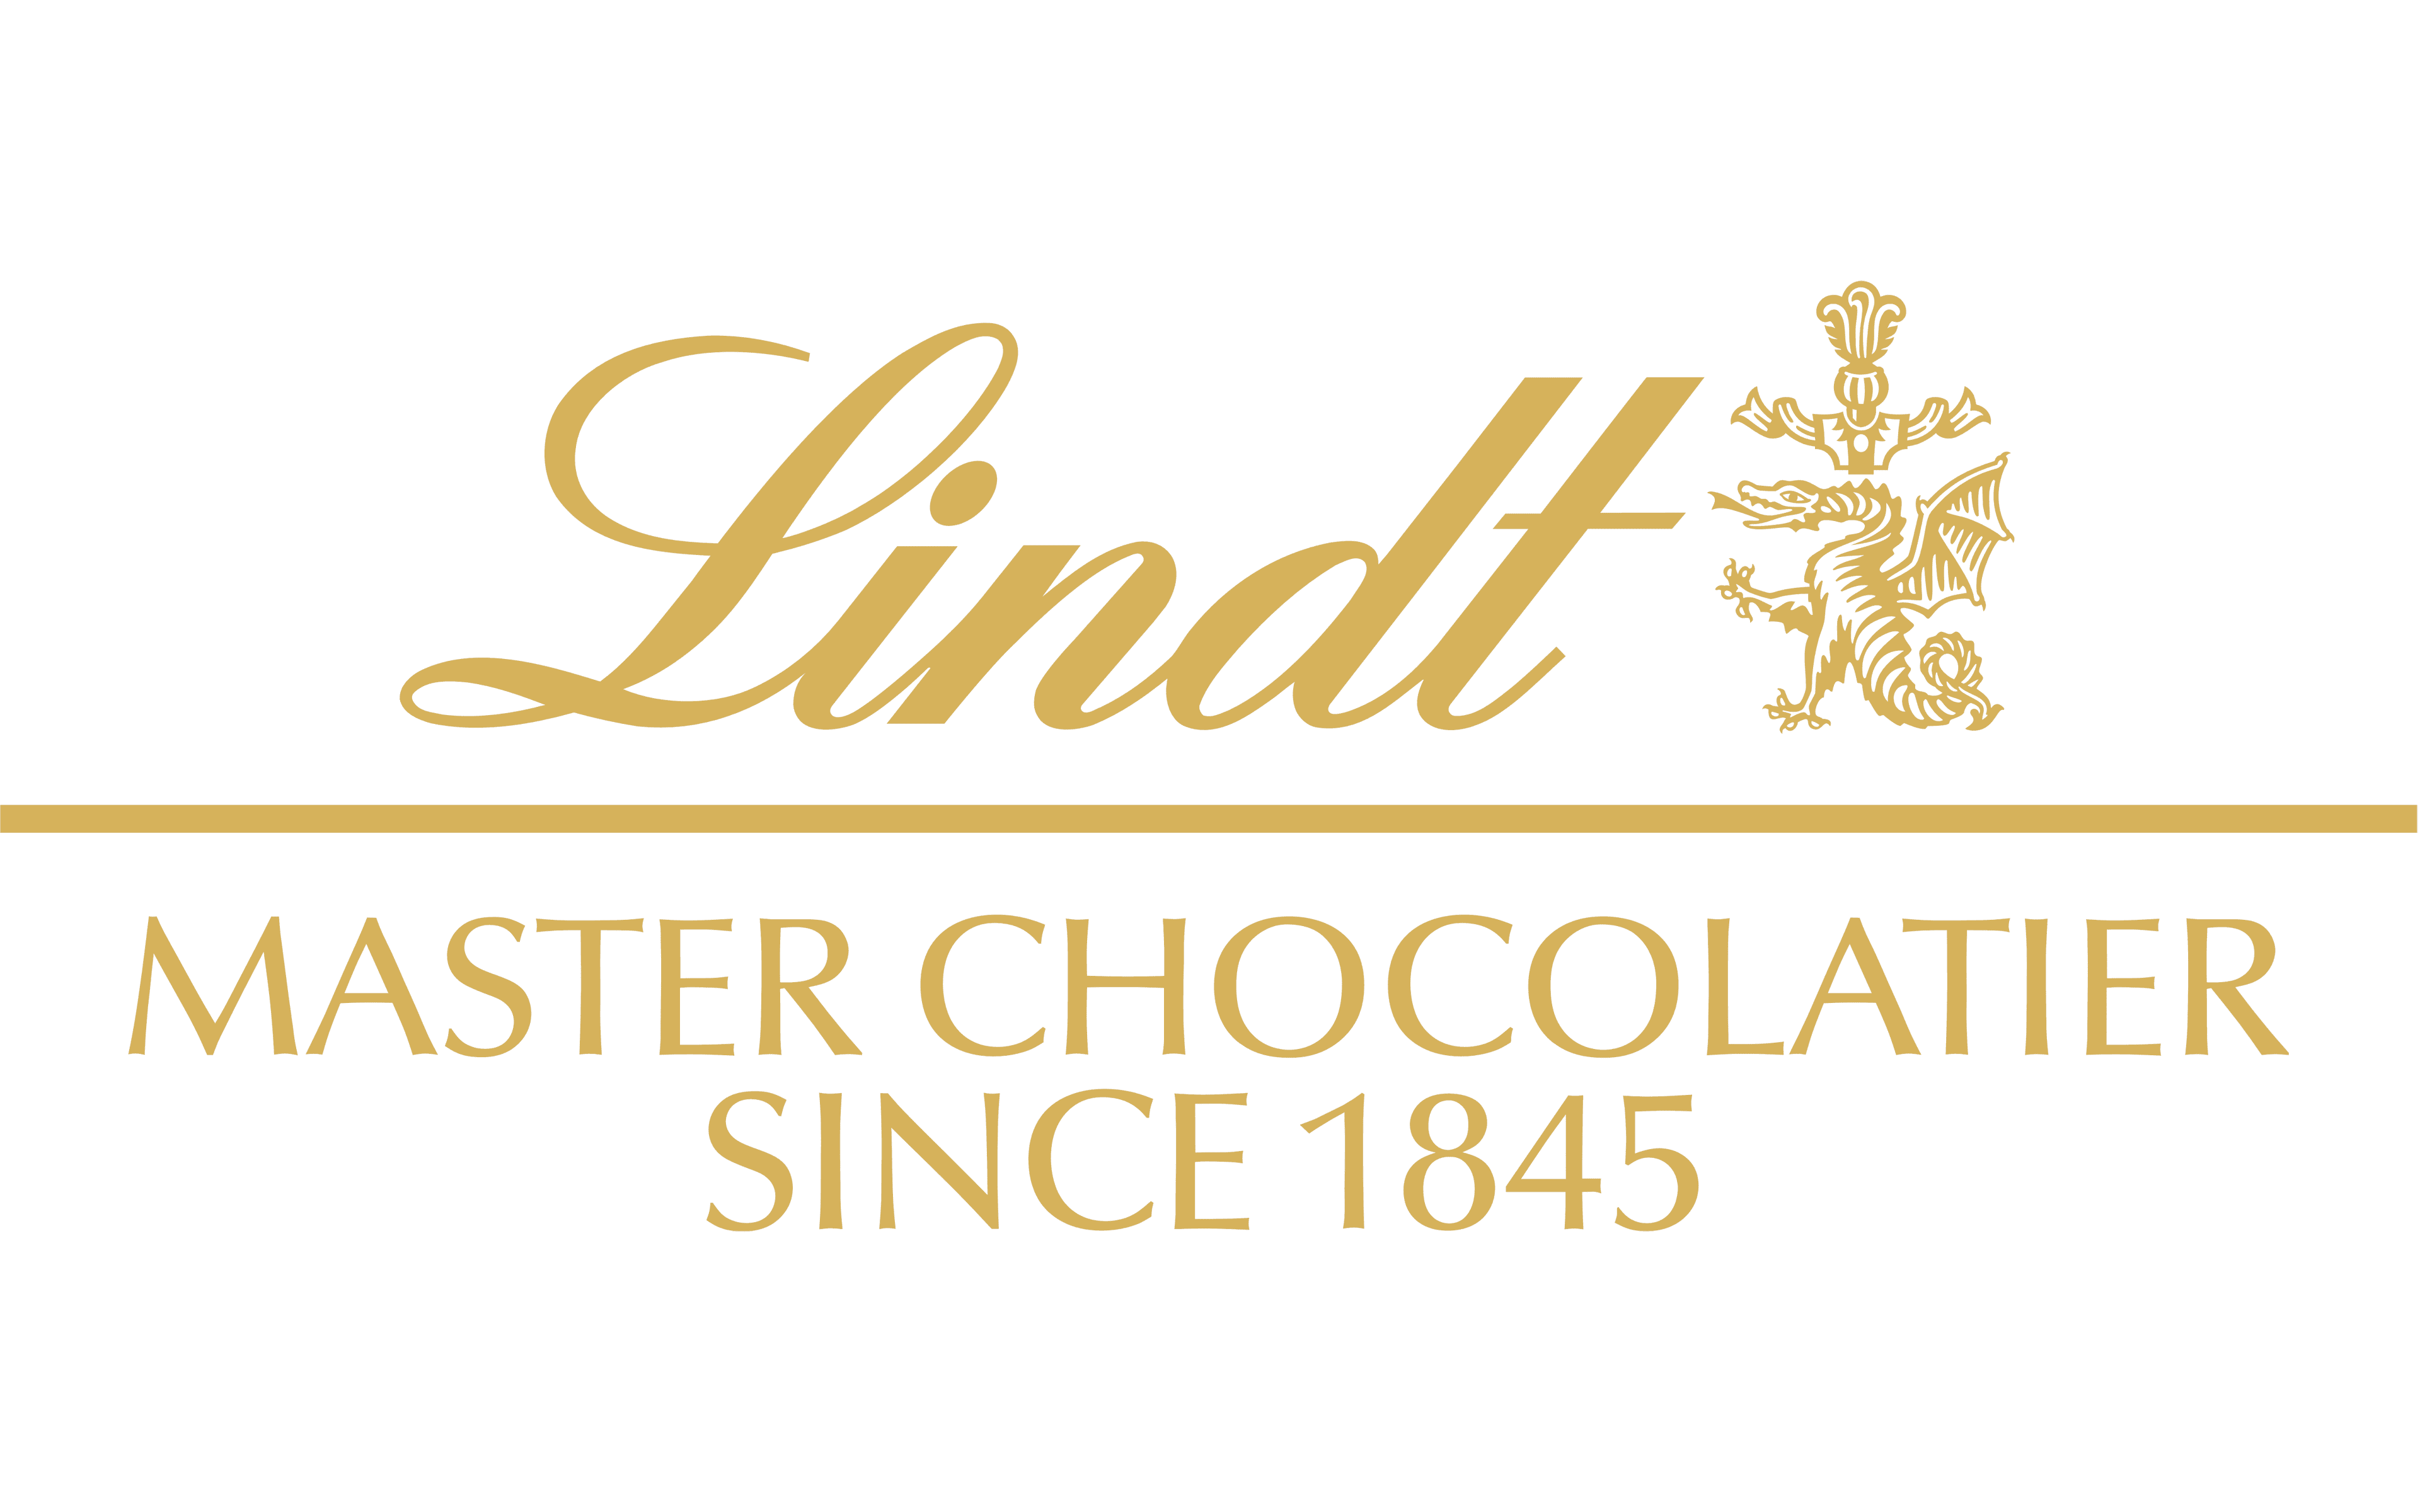 lindt chocolate logo